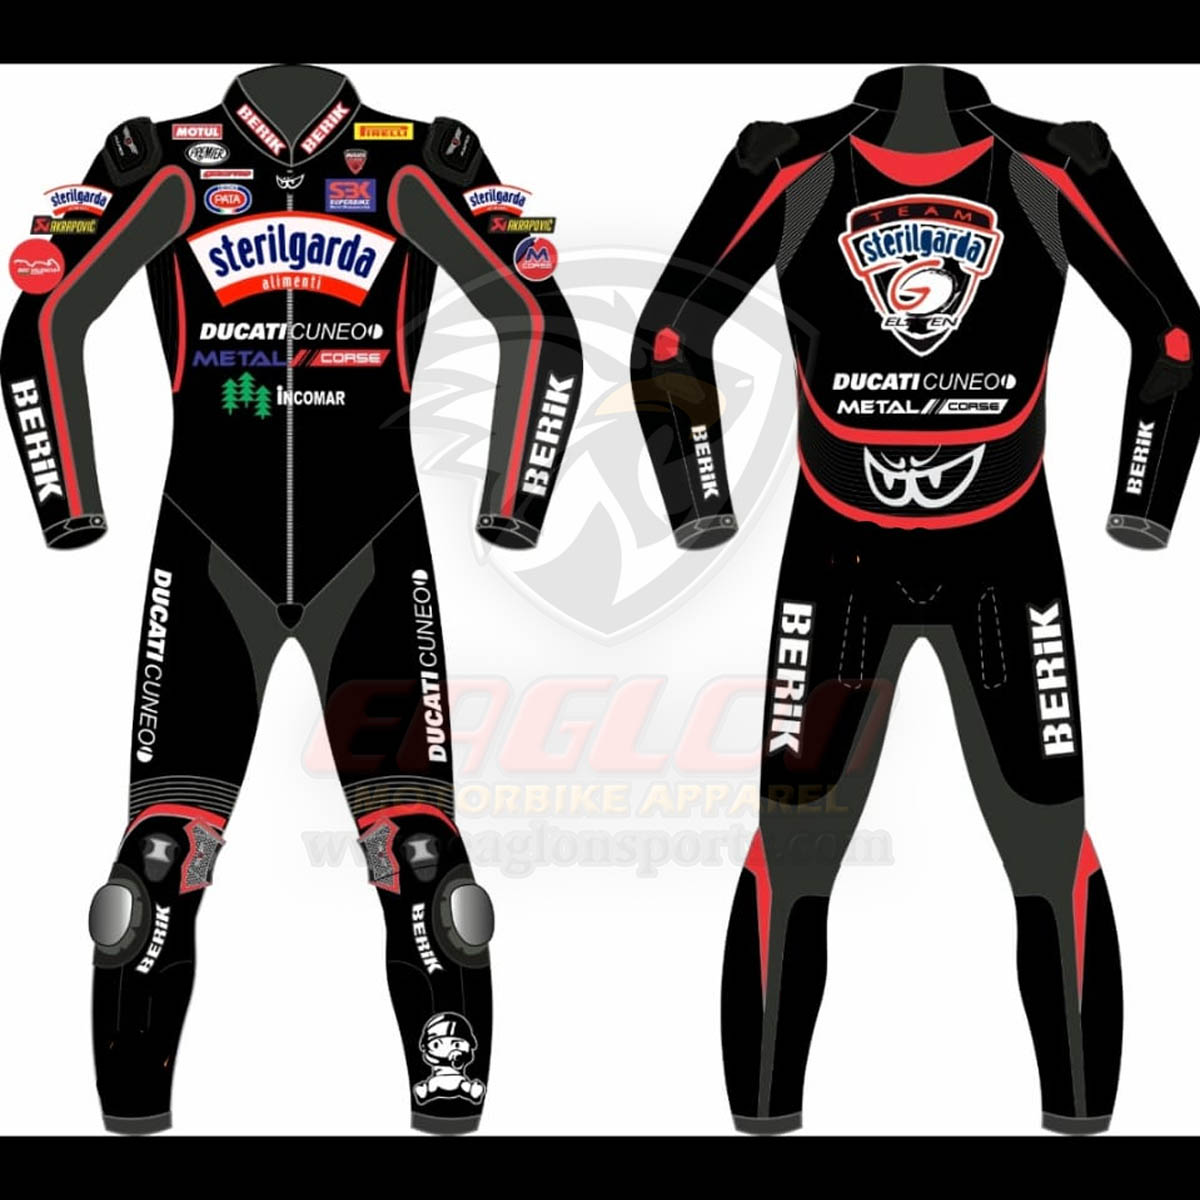 Ruben Xaus 2008 Sterligarda Leather Race Suit